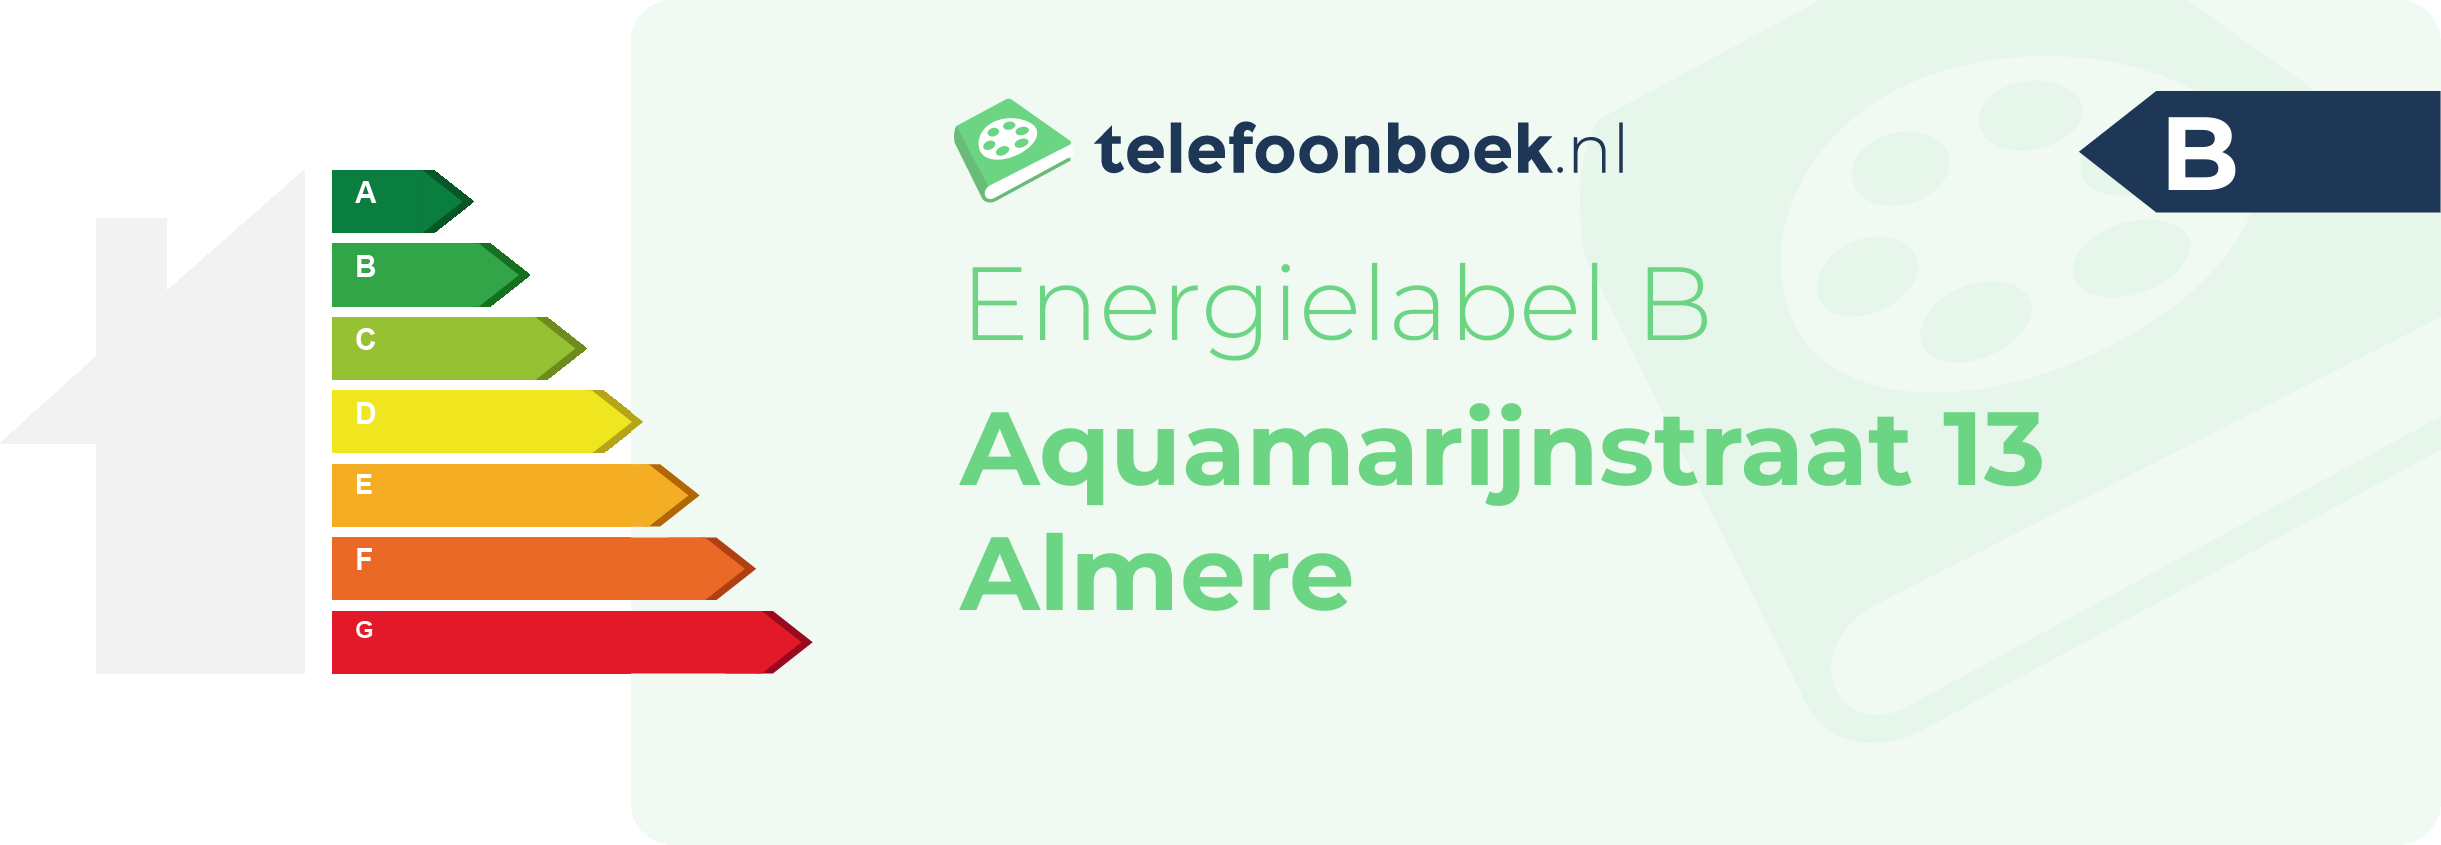 Energielabel Aquamarijnstraat 13 Almere